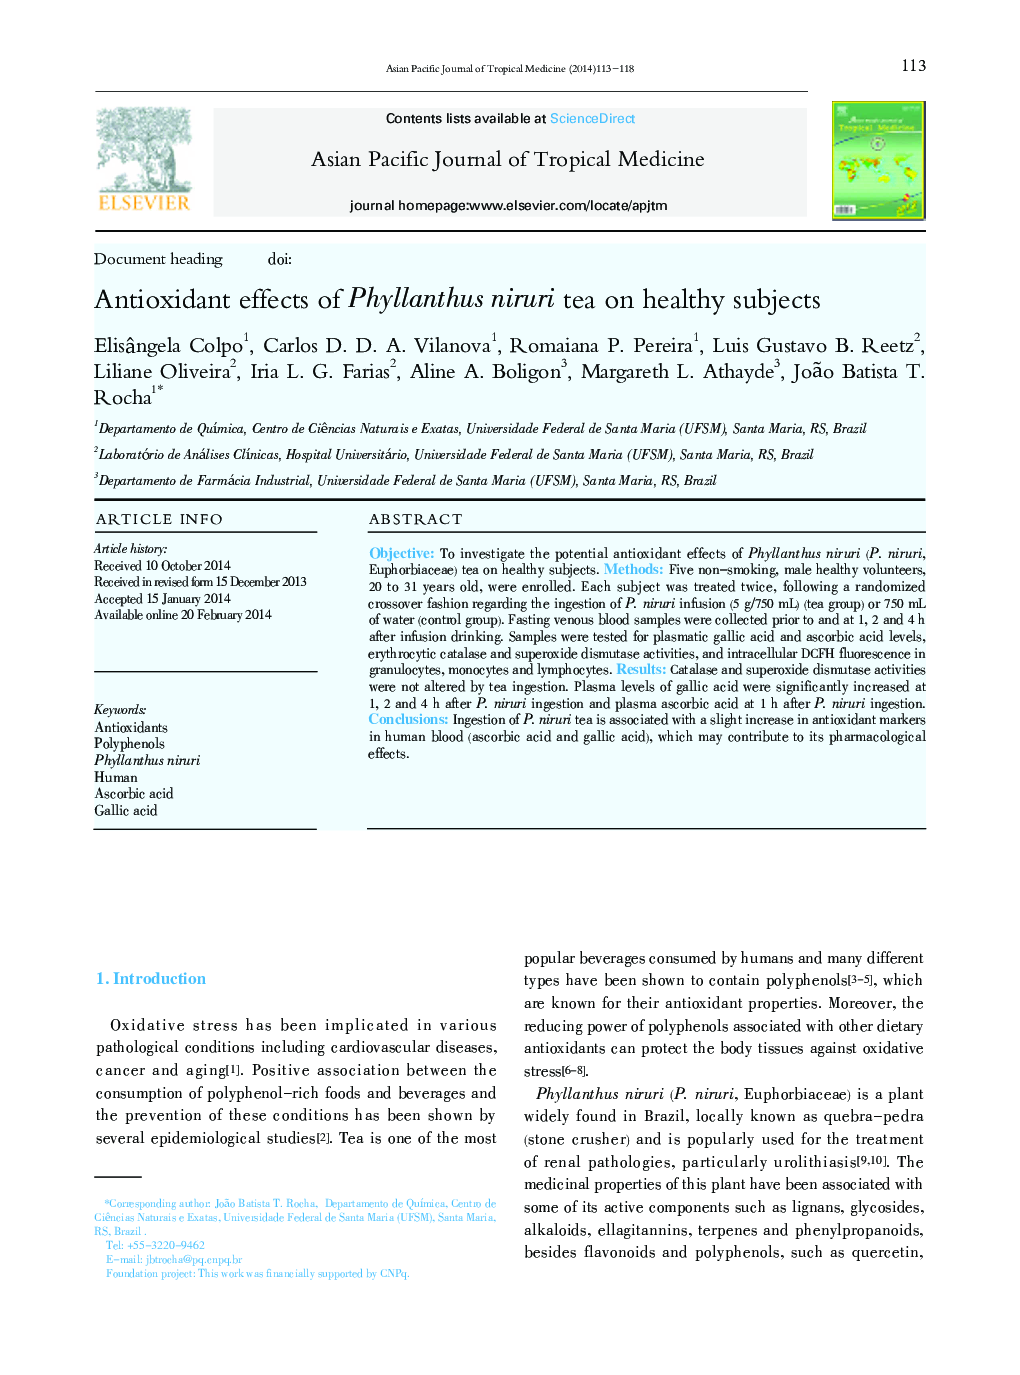 Antioxidant effects of Phyllanthus niruri tea on healthy subjects 